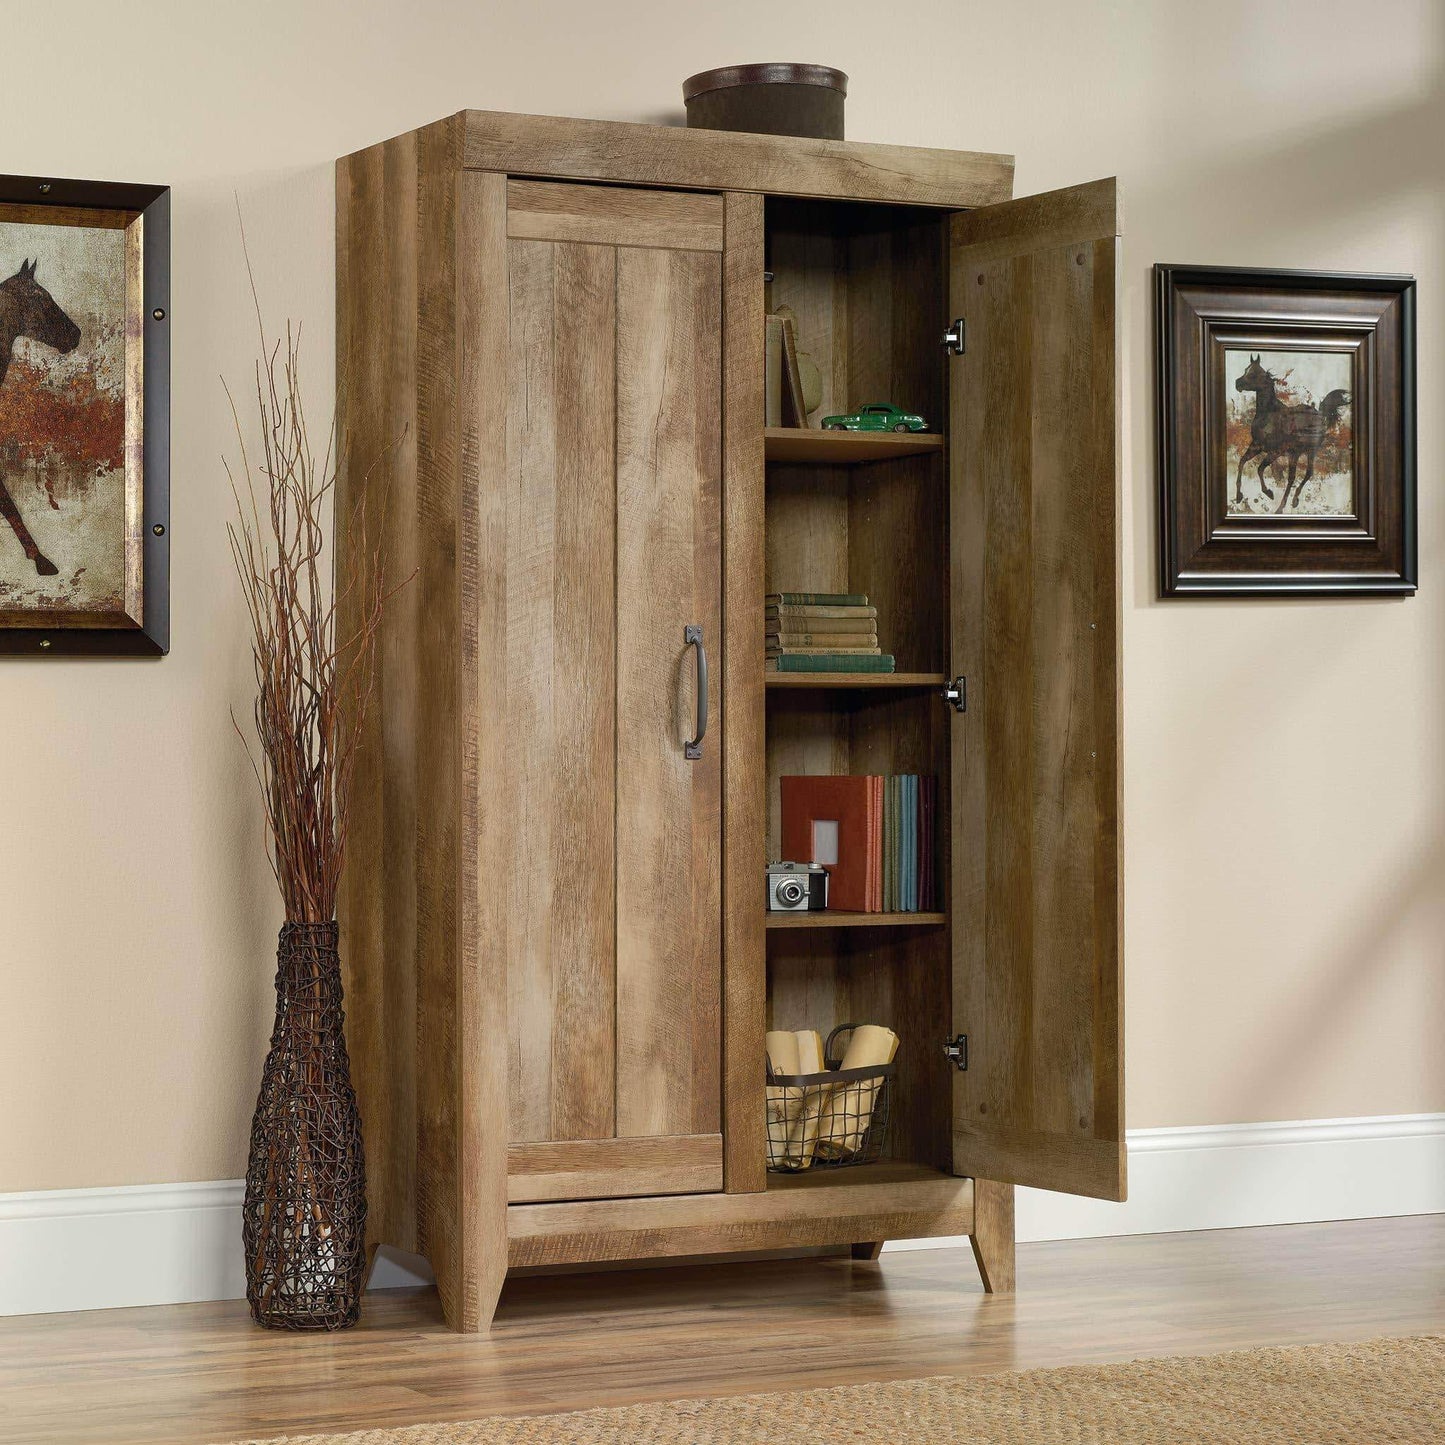 Discover the sauder 418141 adept storage wide storage cabinet l 38 94 x w 16 77 x h 70 98 craftsman oak finish